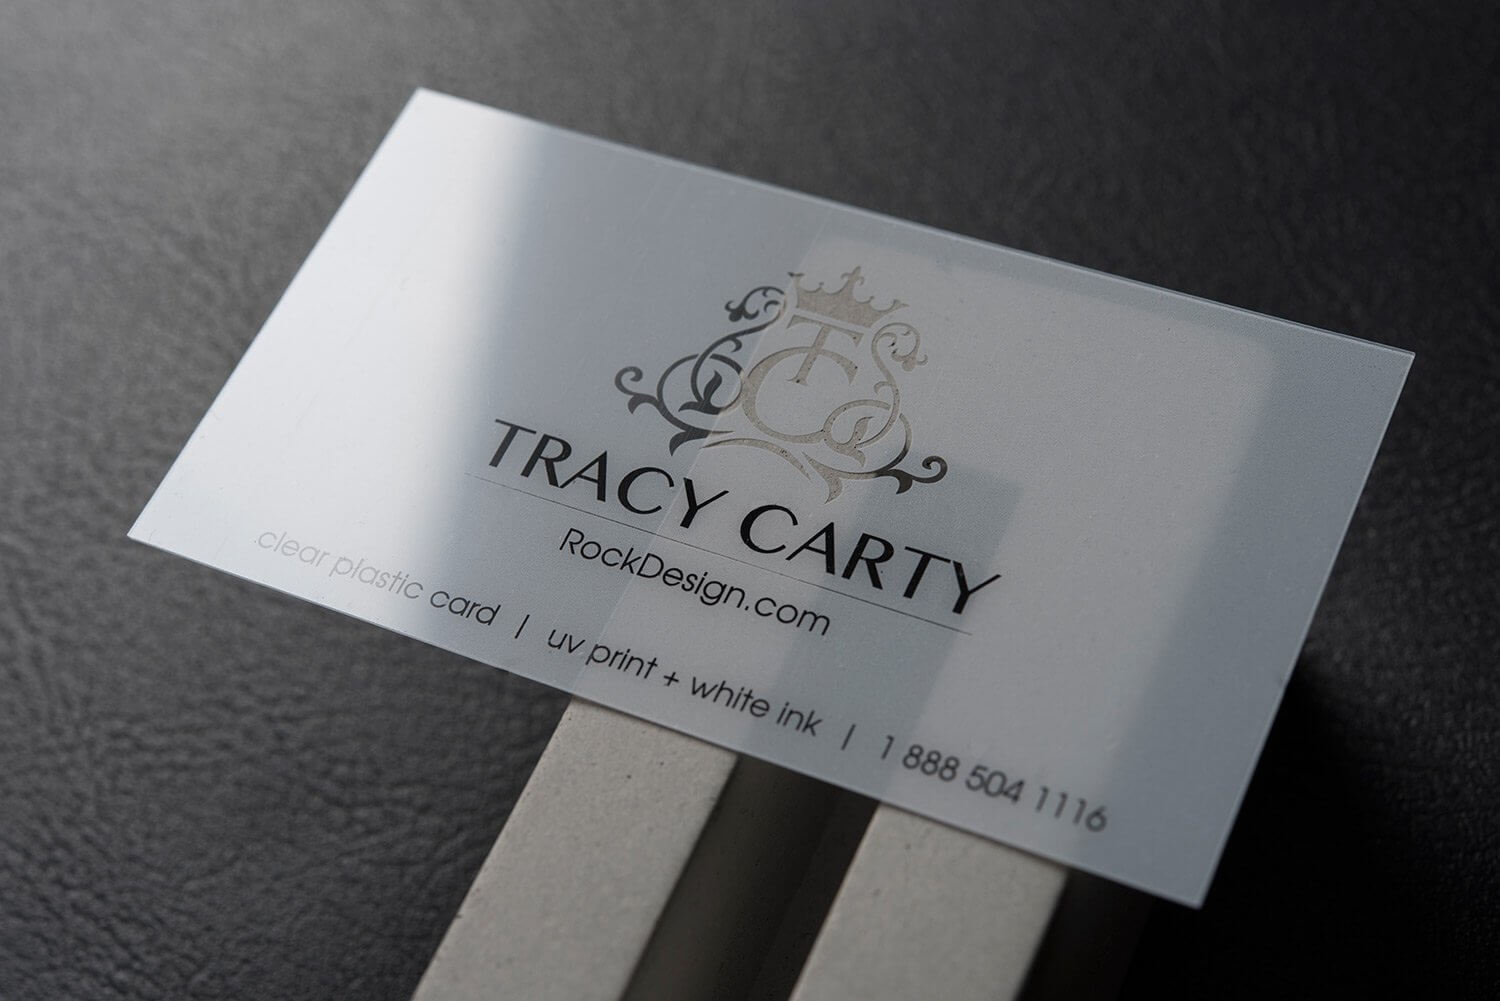 Elegant Transparent Plastic Name Card Design – Tracy Carty Regarding Transparent Business Cards Template